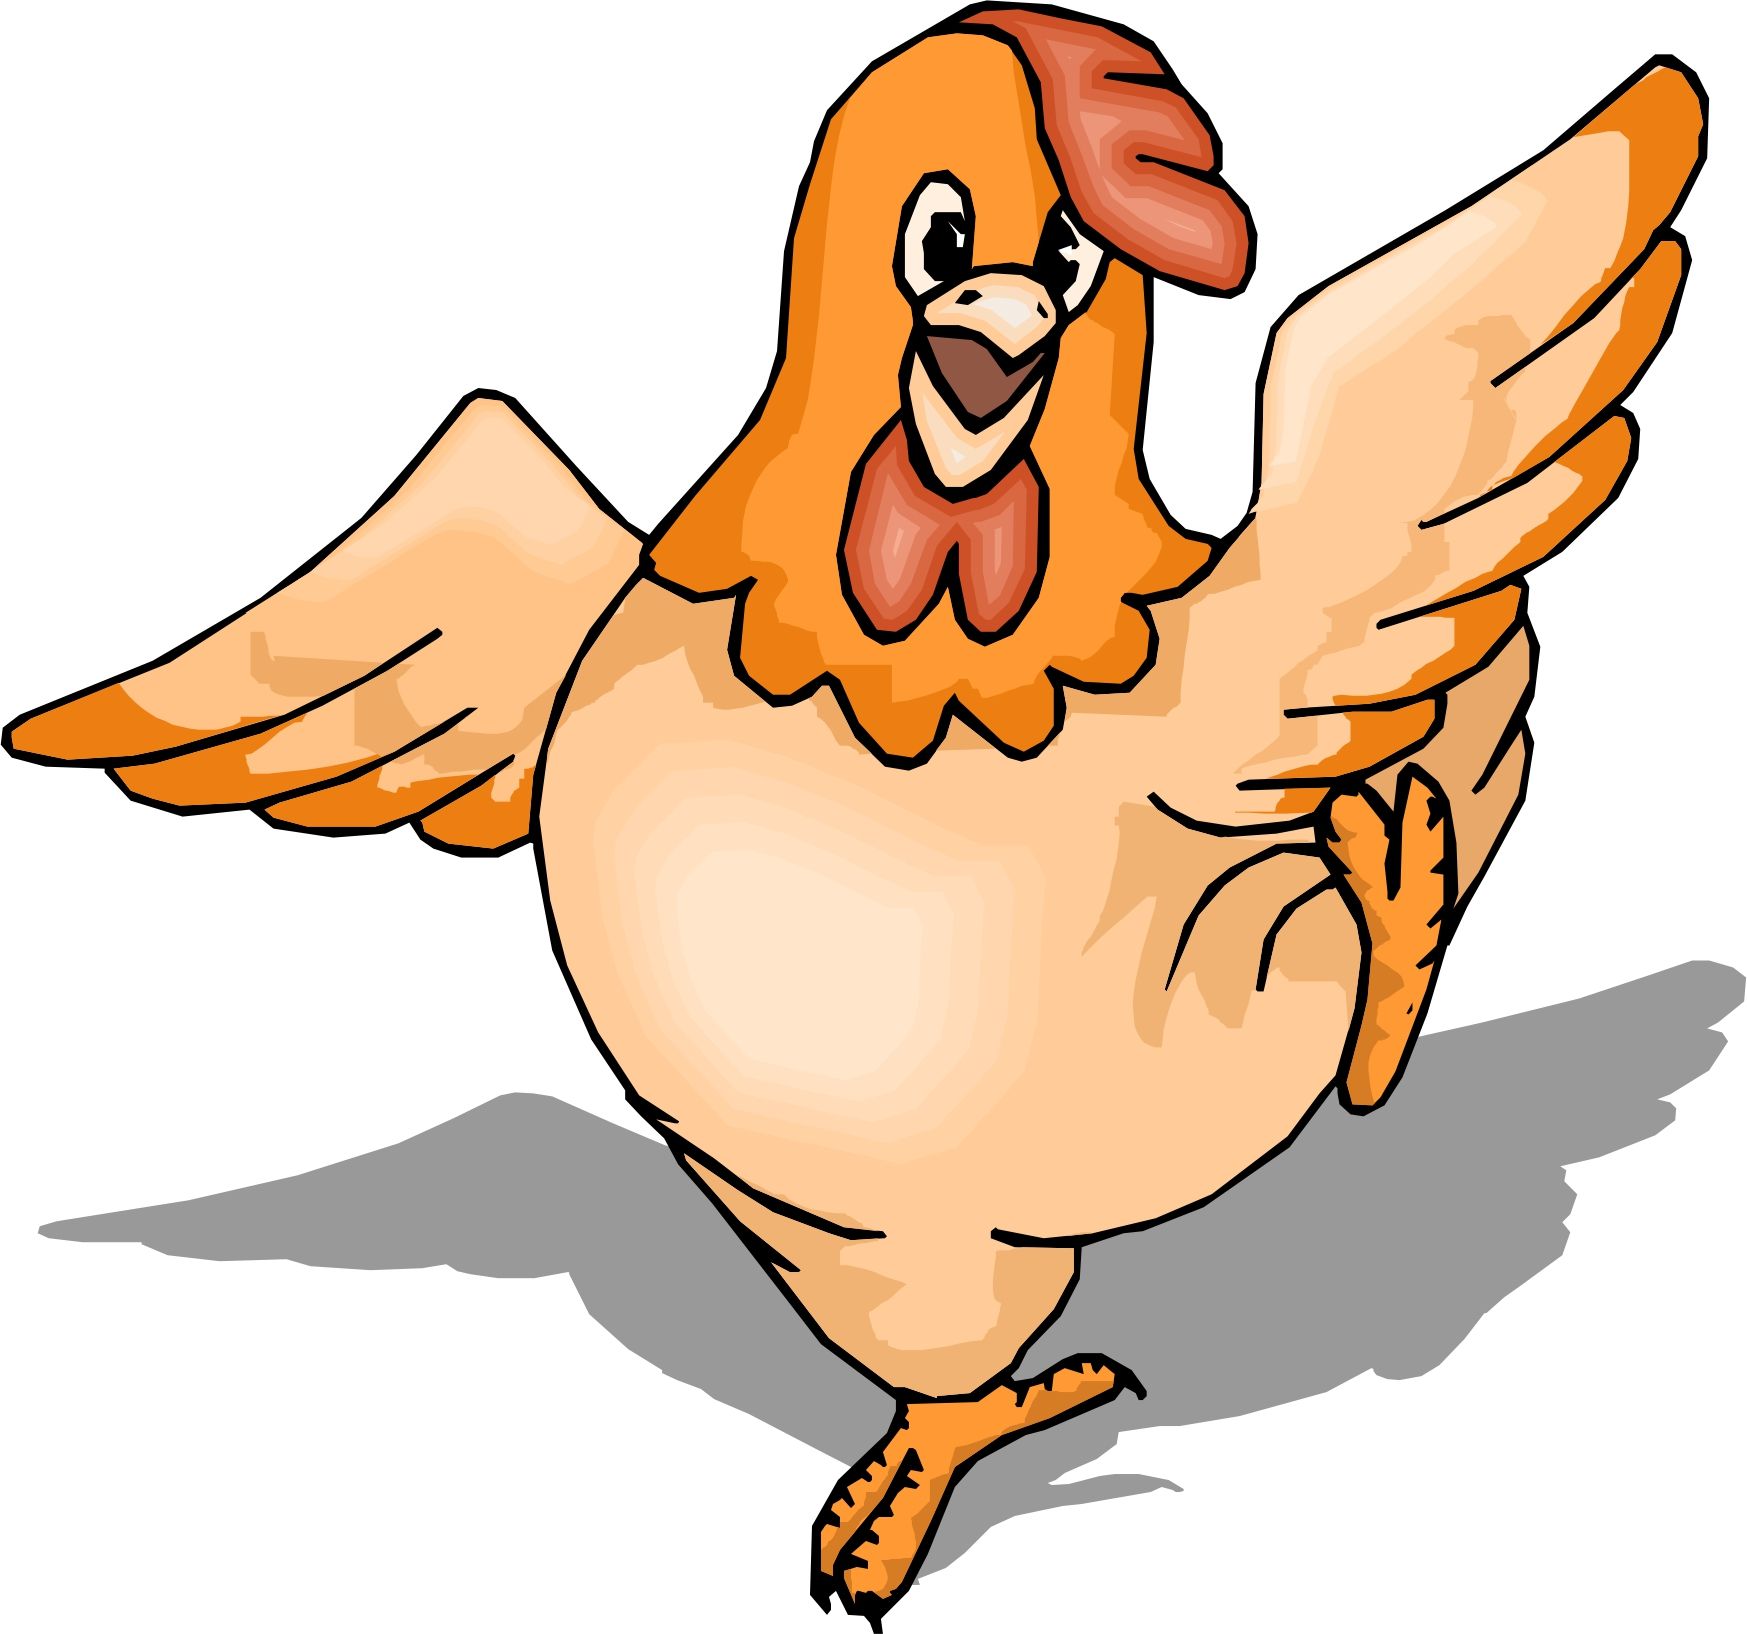 Free Chicken Picture Cartoon, Download Free Clip Art, Free Clip